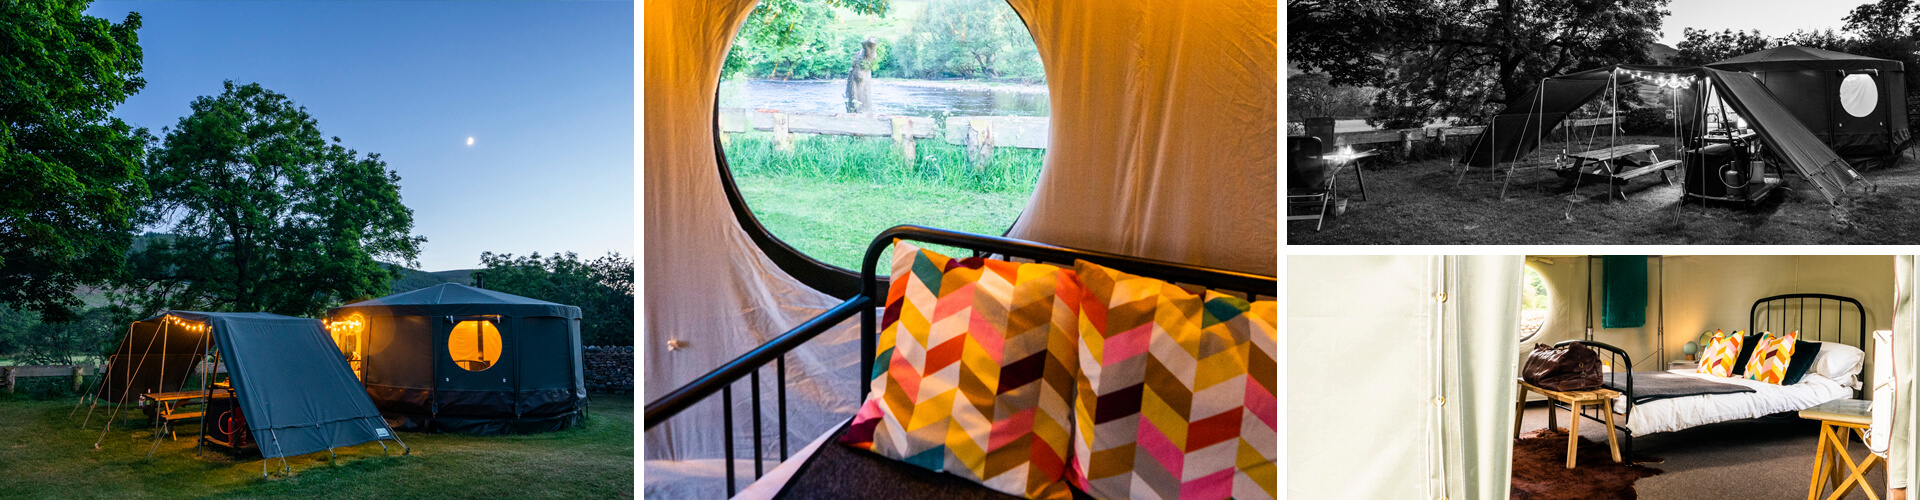 Masons Campsite Glamping Luxury River View Yurt